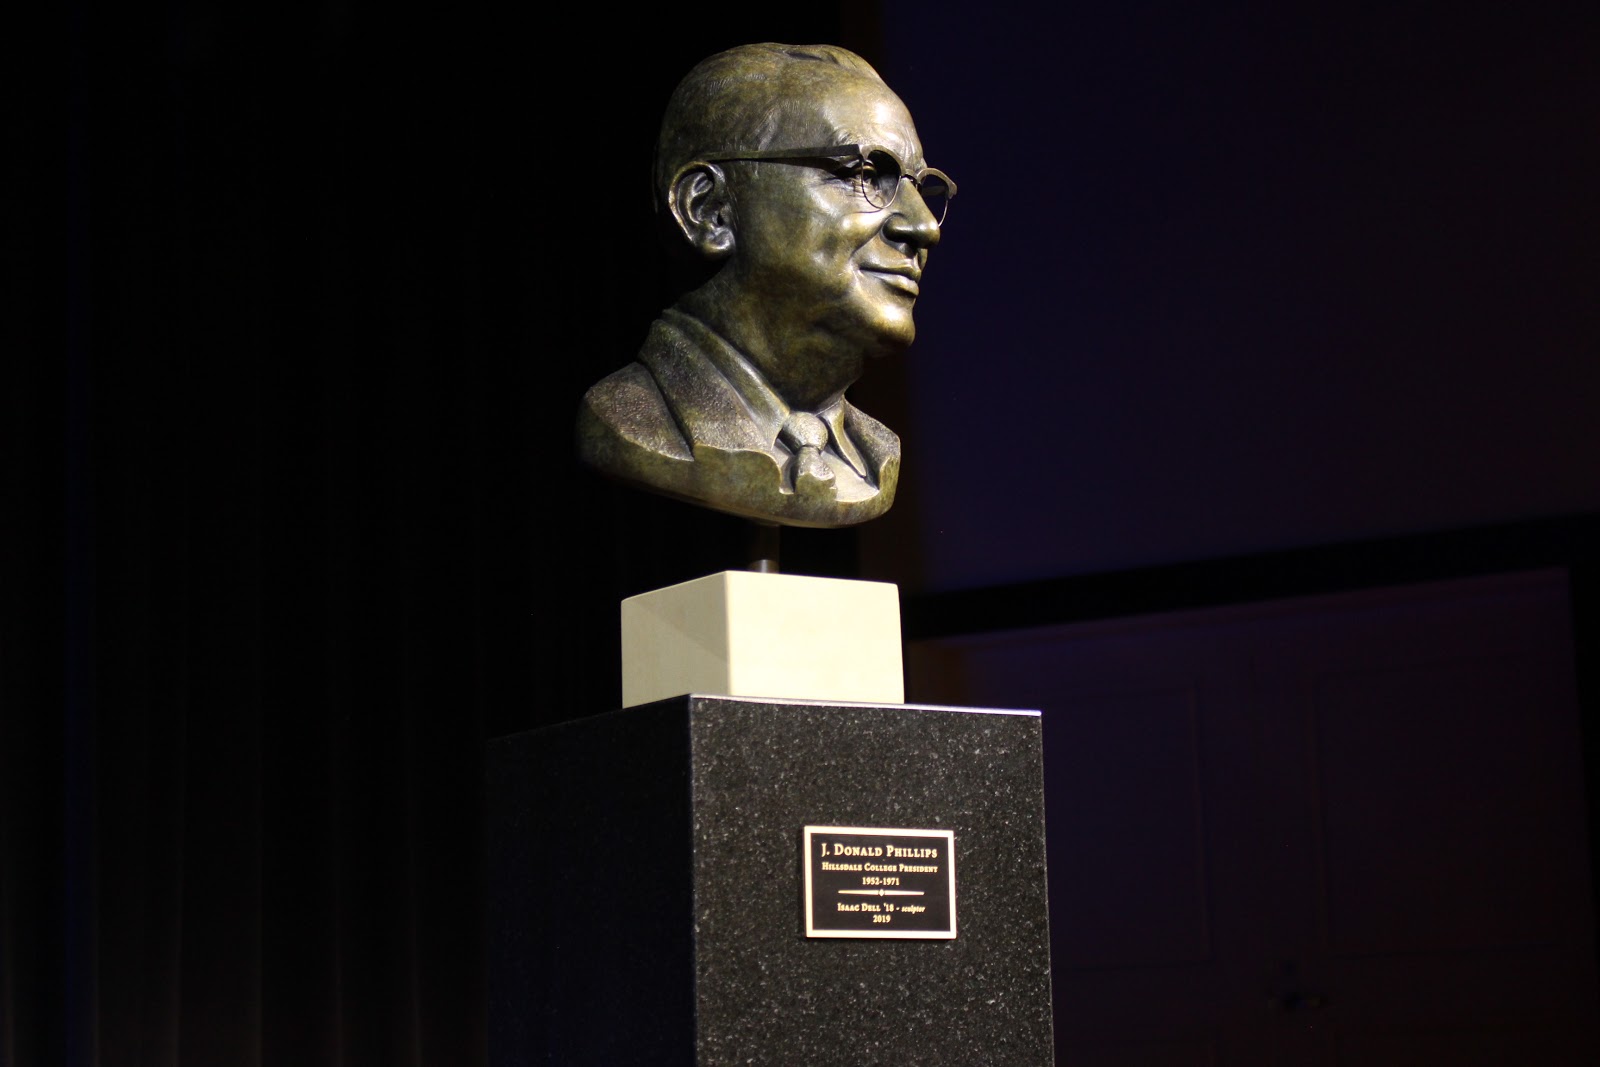 College dedicates Phillips bust